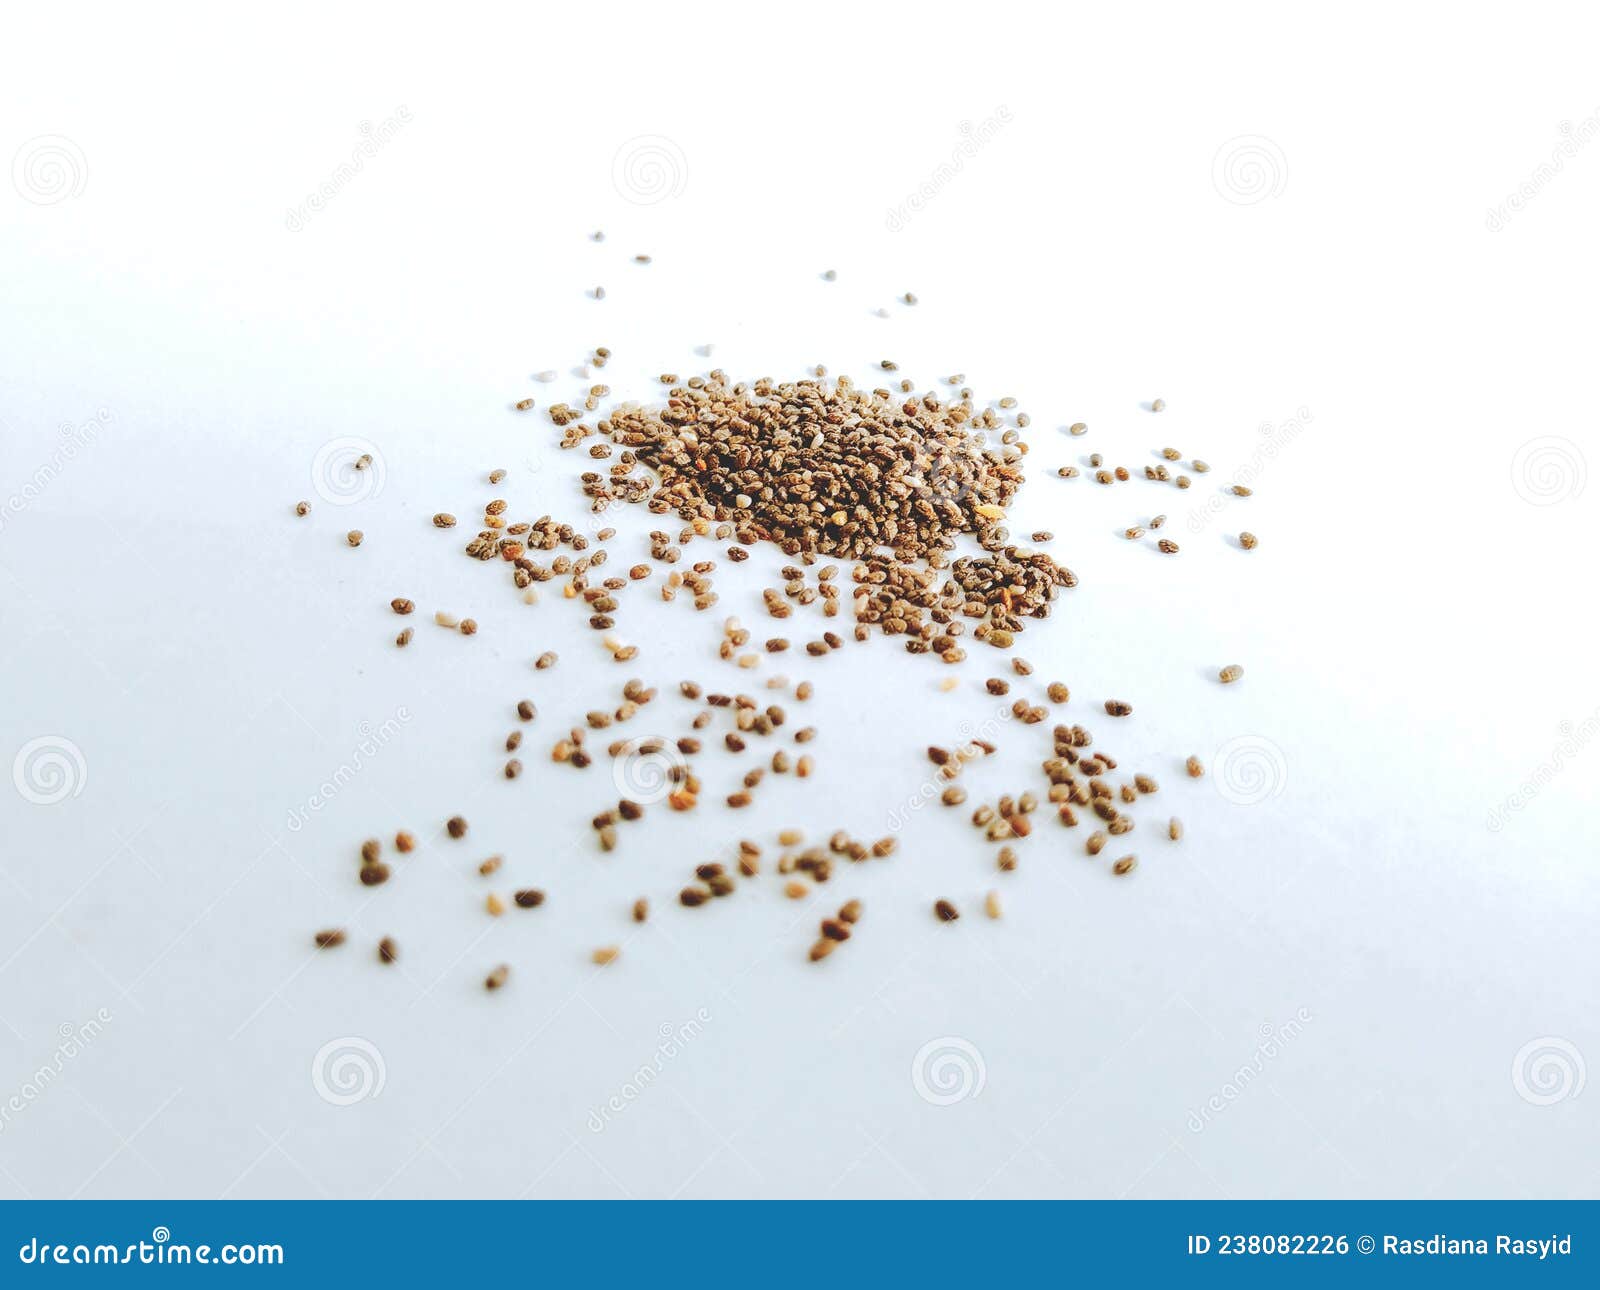 chia seeds are the tiny seeds of the salvia hispanics plant